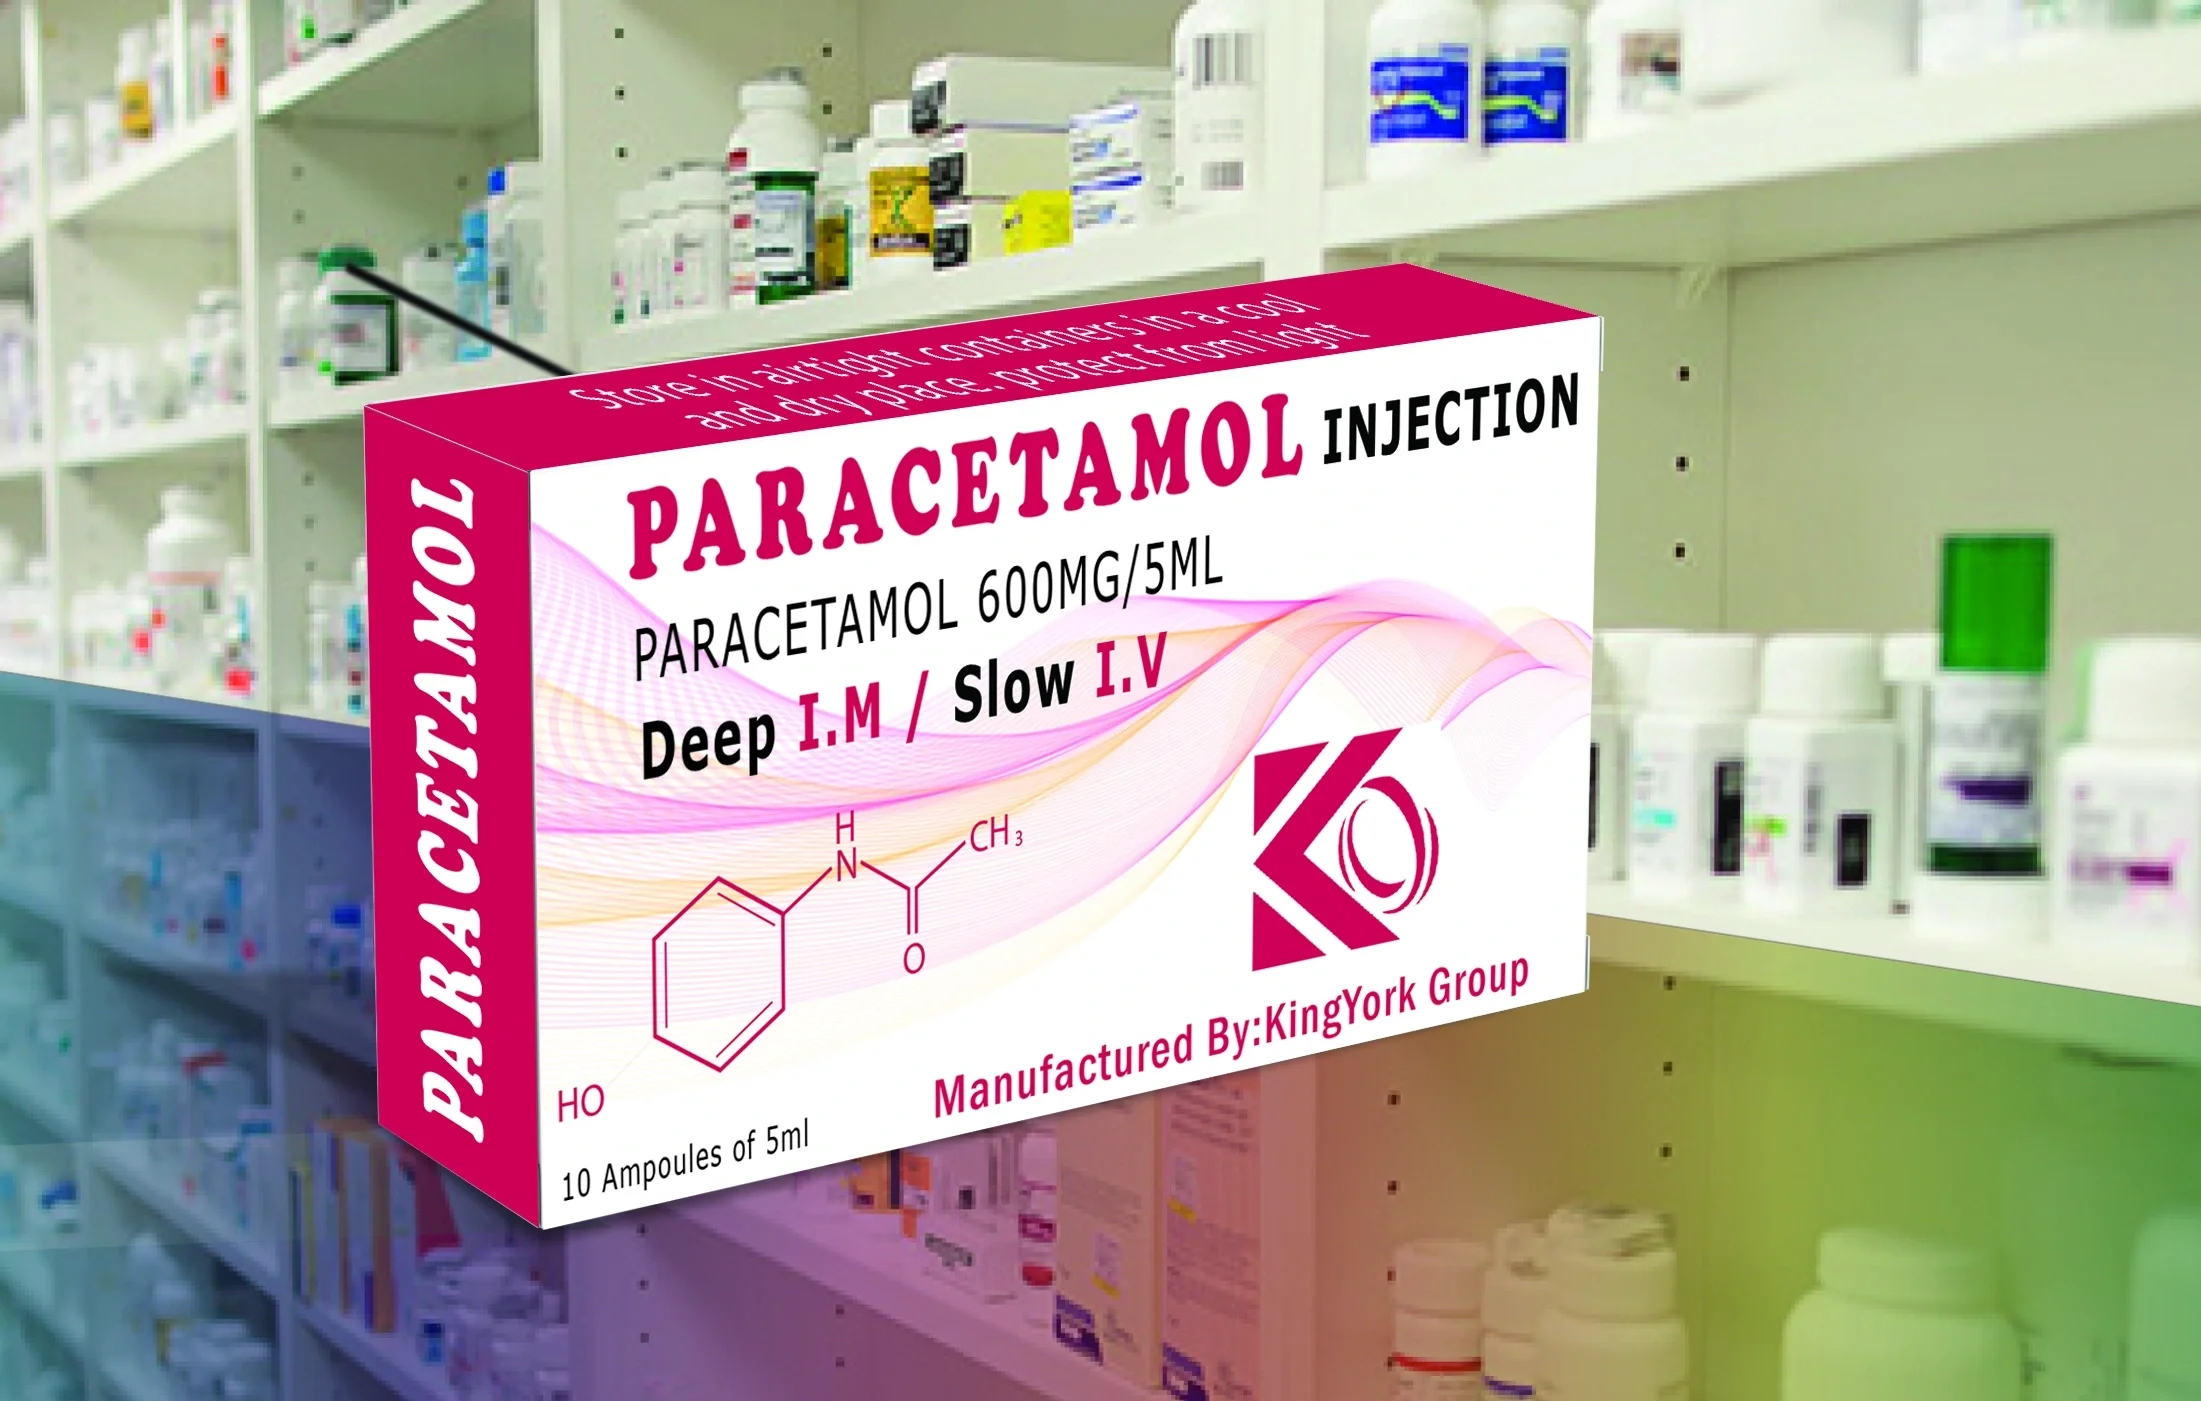 'paracetamol injections', 'analgesic ampoules', 'paracetamol 300mg injection', 'paracetamol'